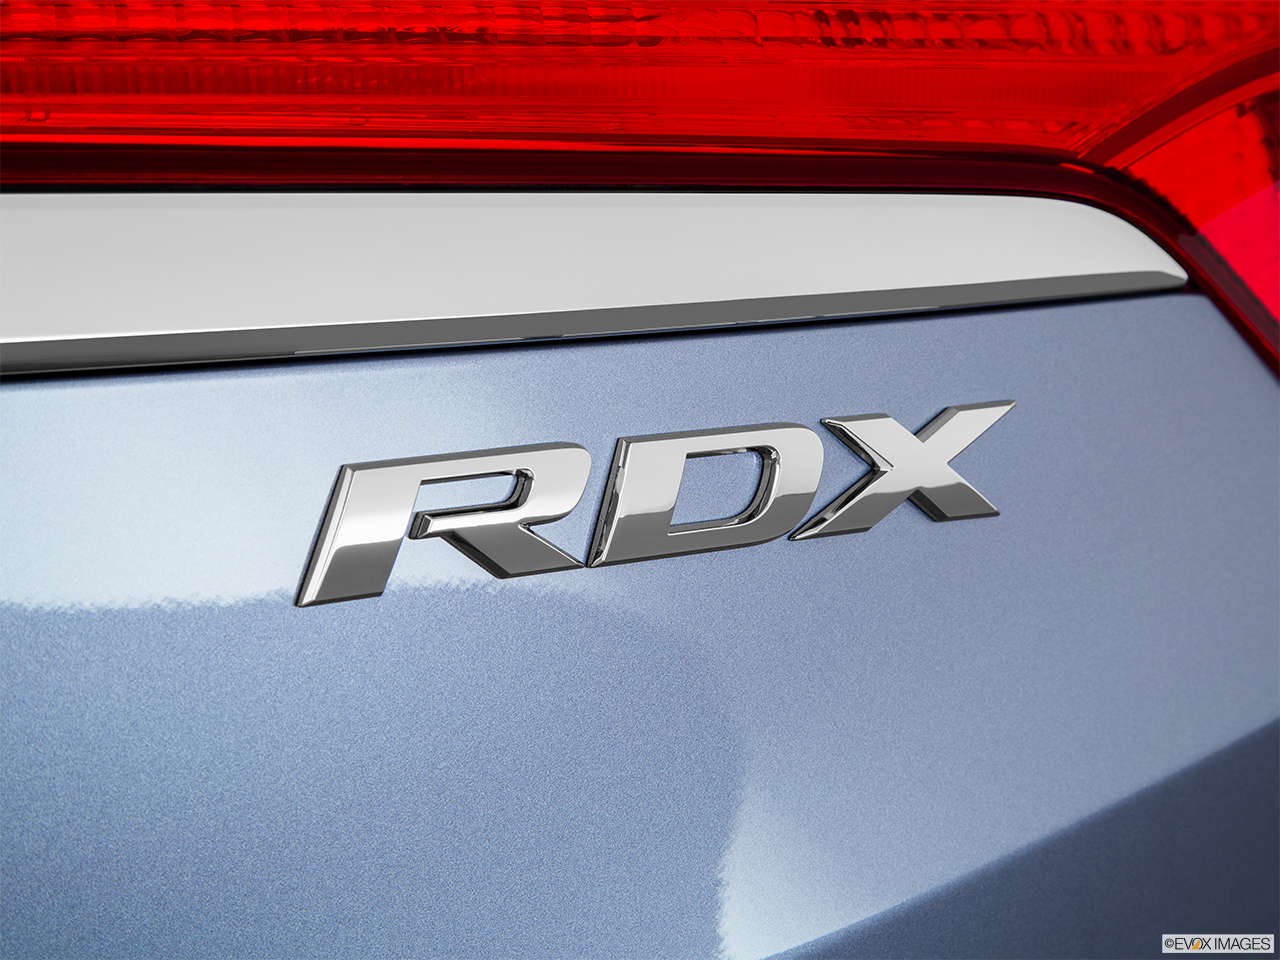 2015 Acura RDX AWD Rear model badge/emblem 